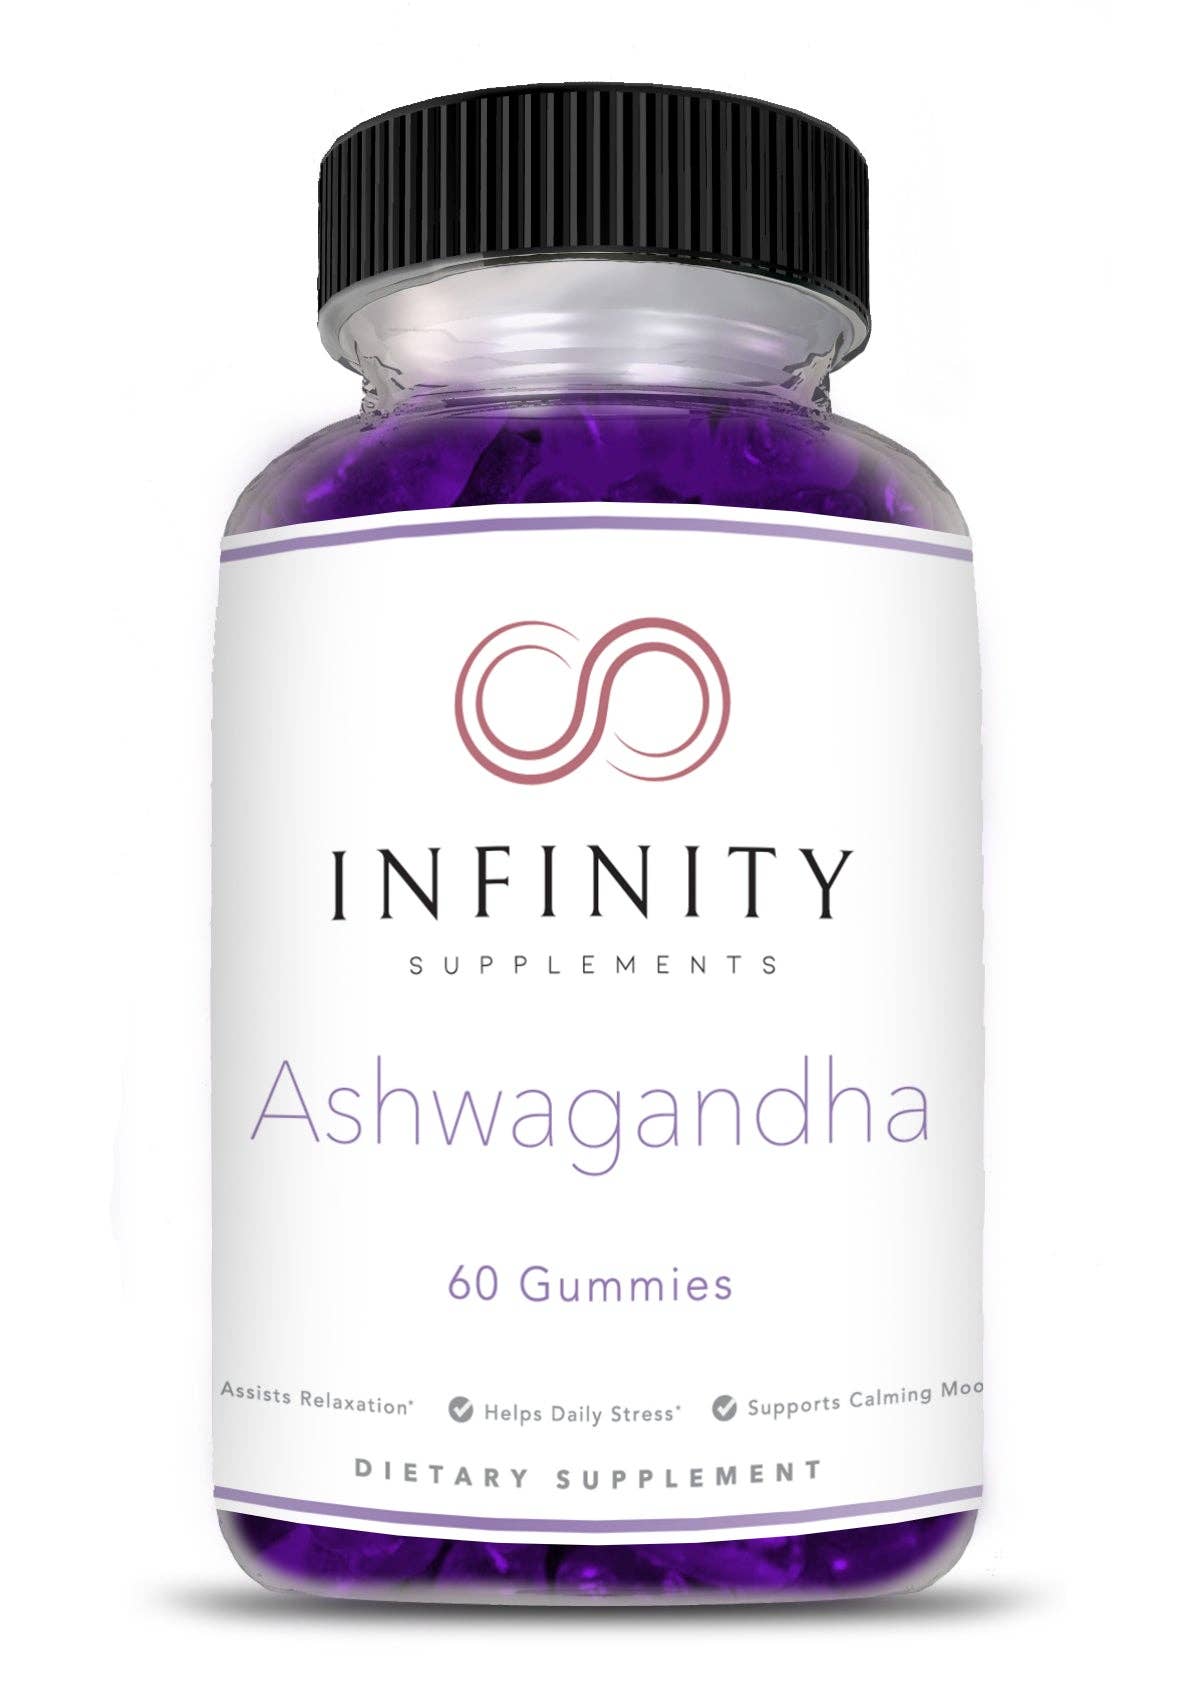 Infinity Supplements - Ashwagandha Gummies